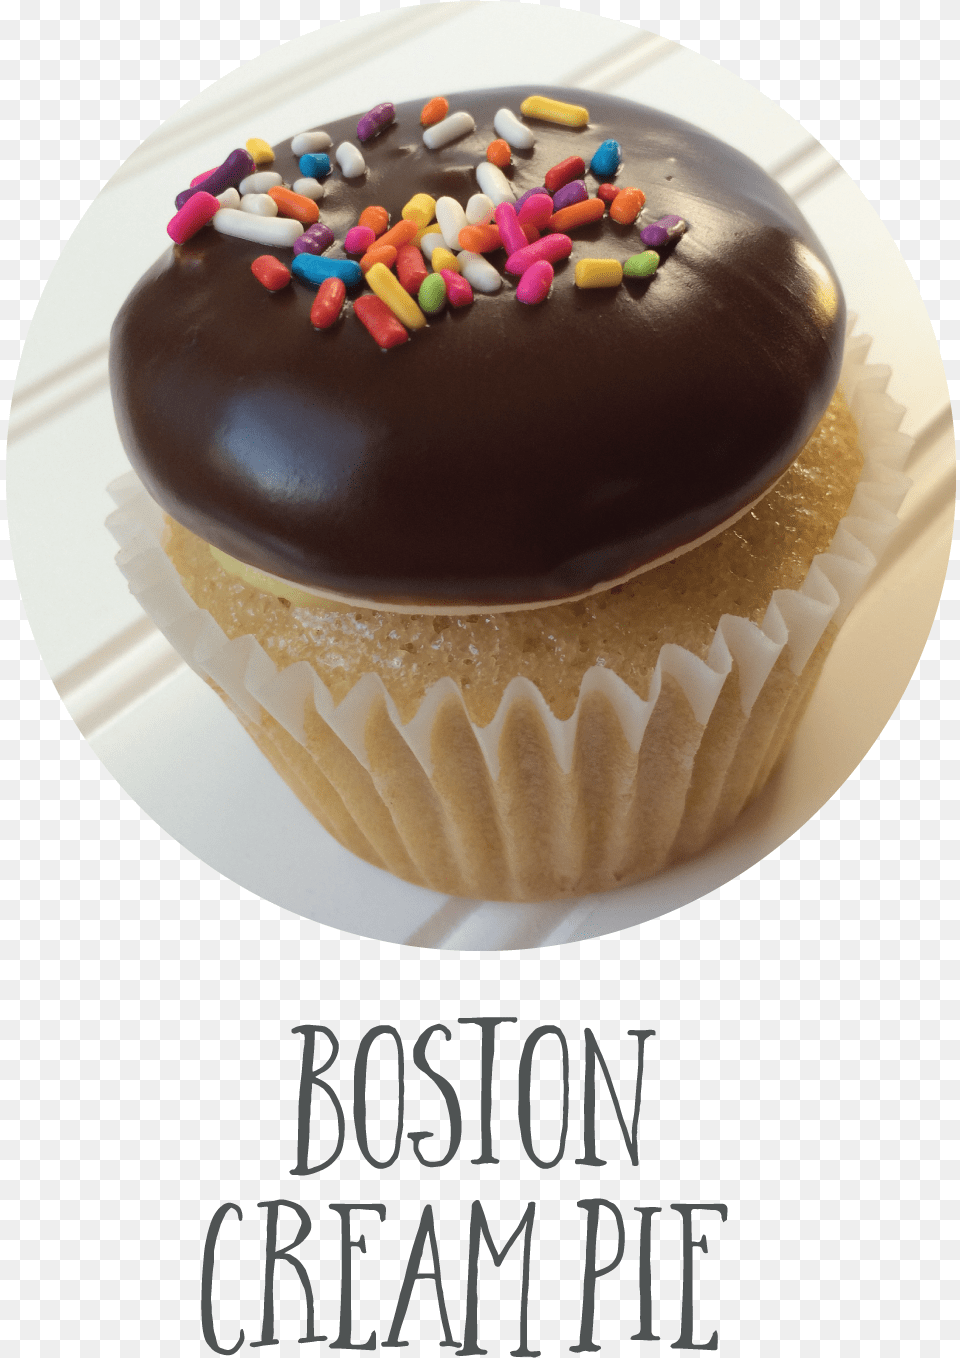 Boston Cream Pie, Cake, Cupcake, Dessert, Food Png Image